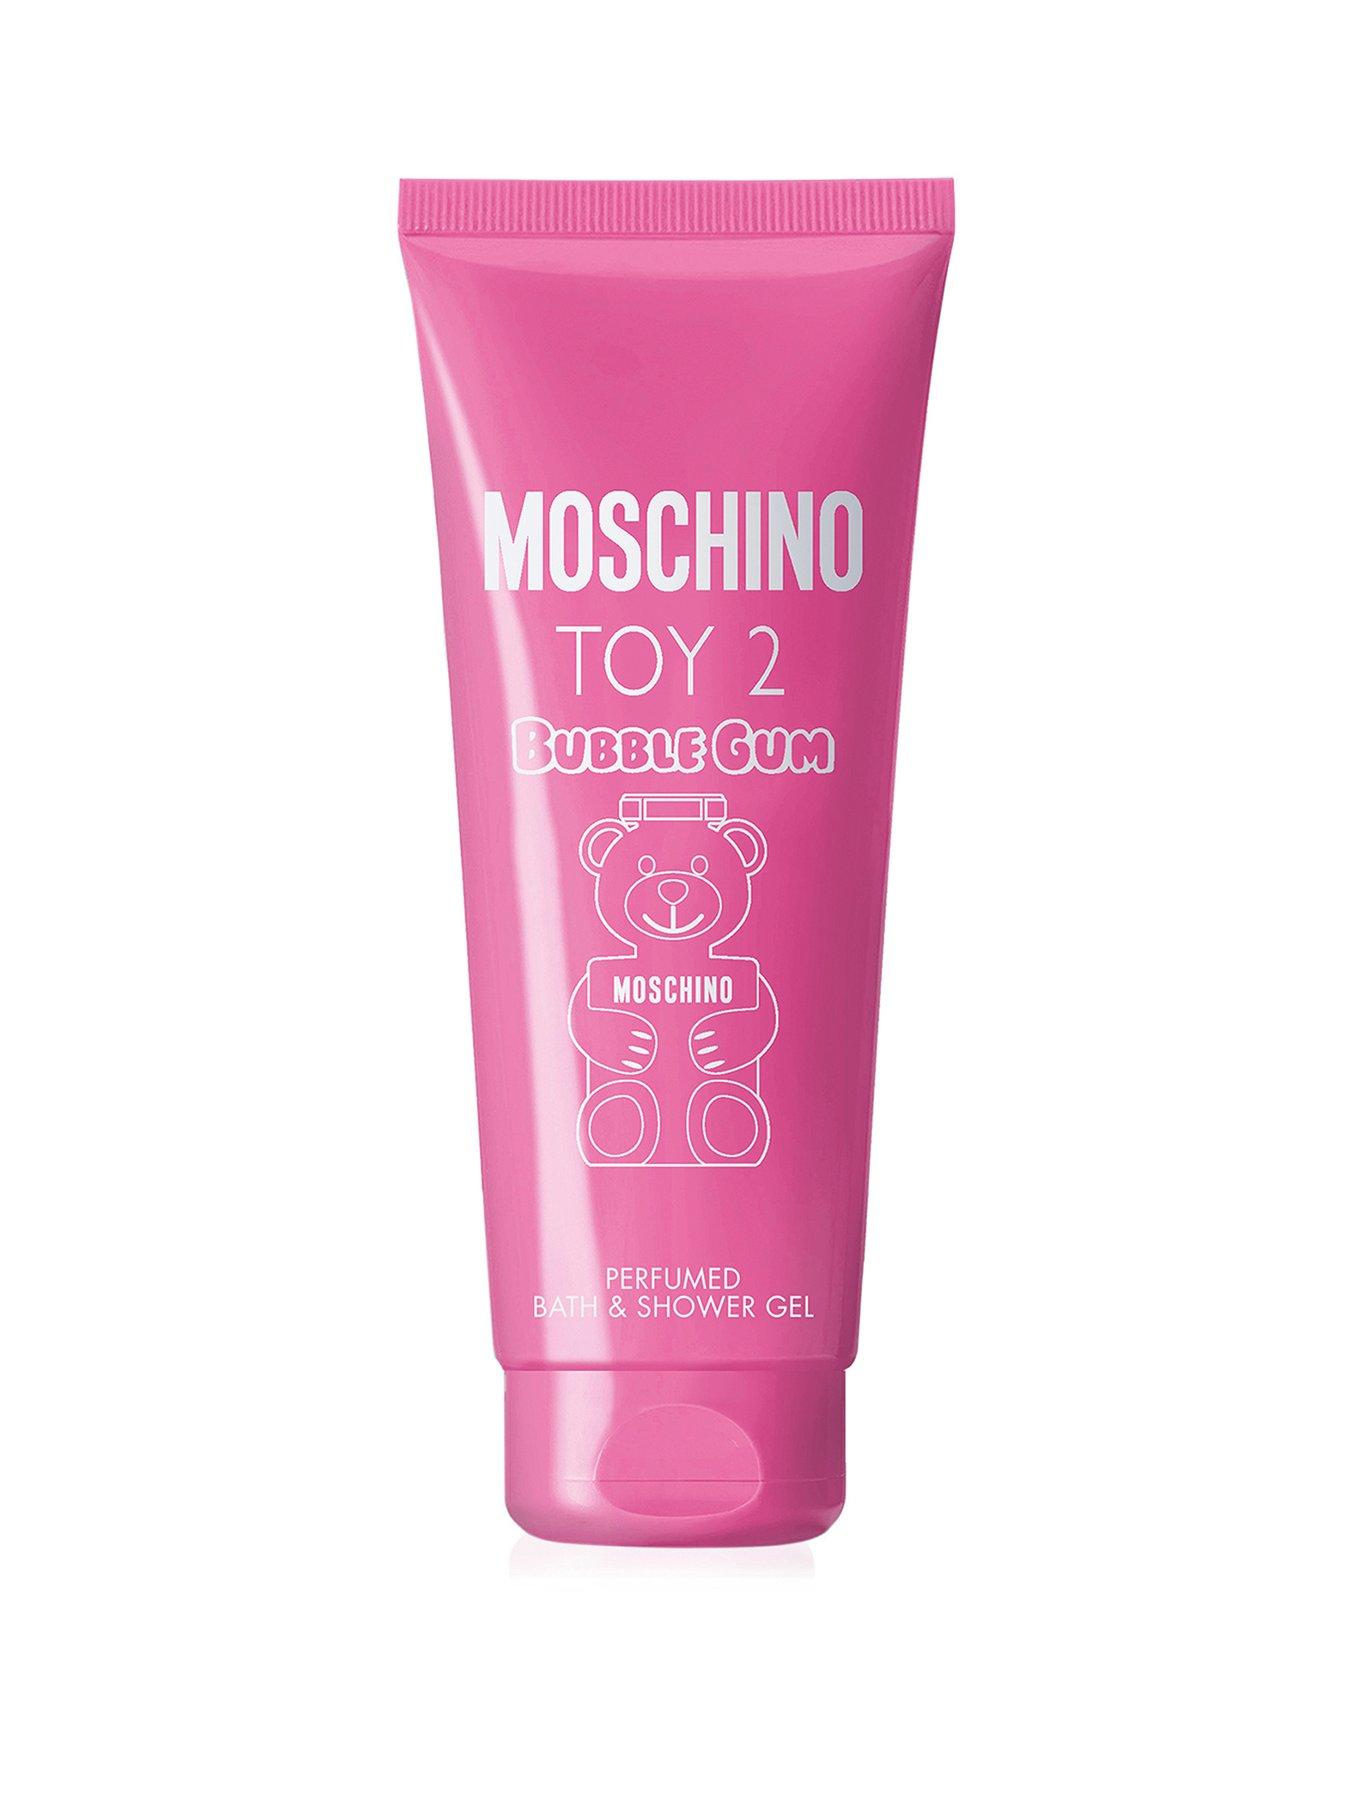 Moschino Toy2 Bubblegum Shower Gel 200ml | very.co.uk